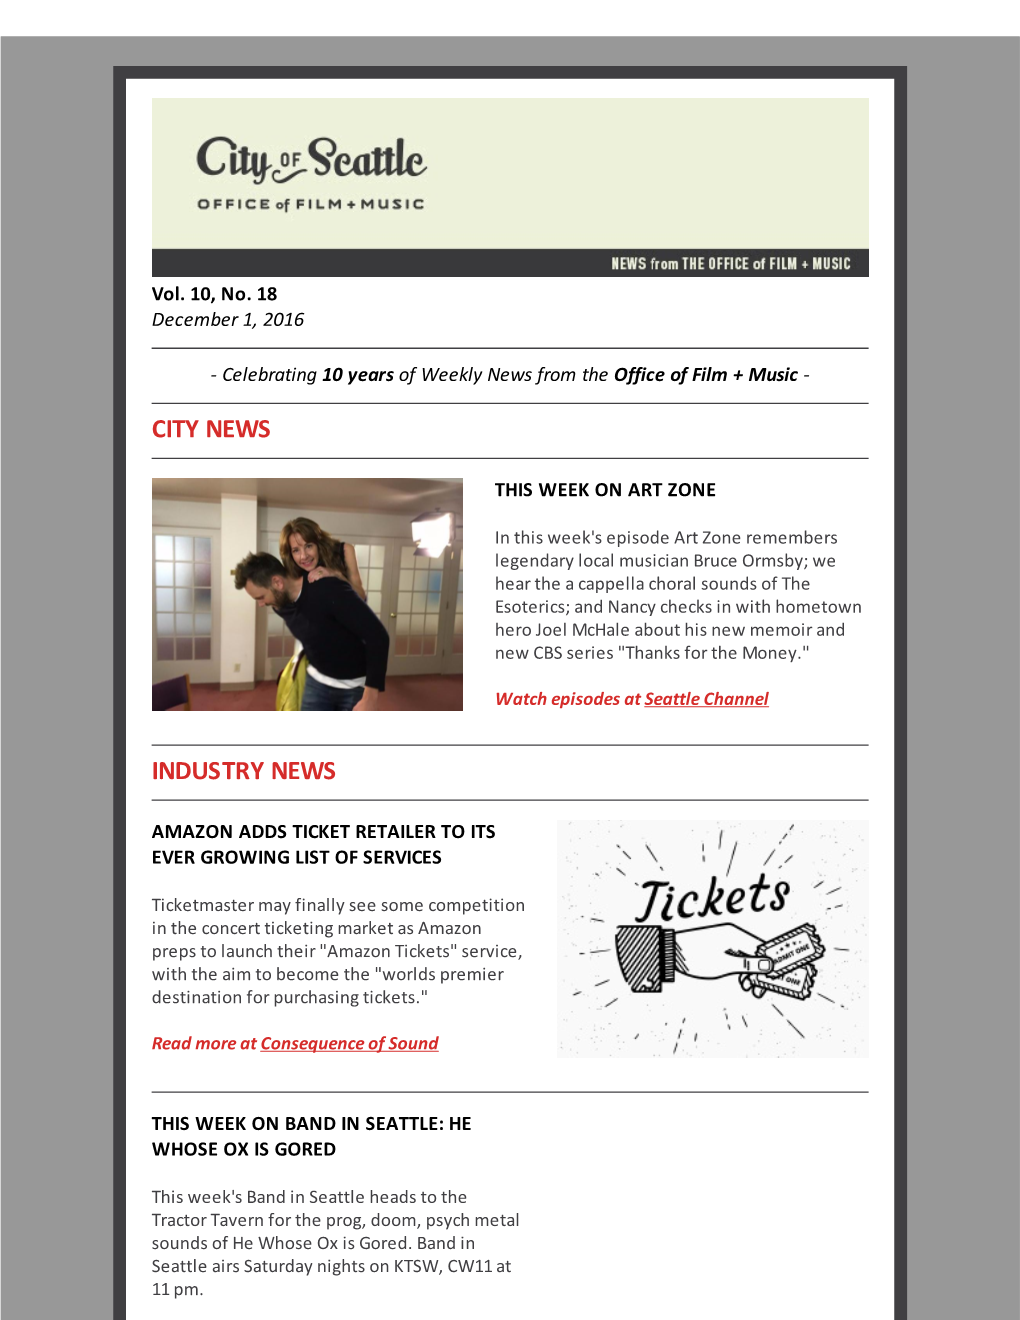 City News Industry News